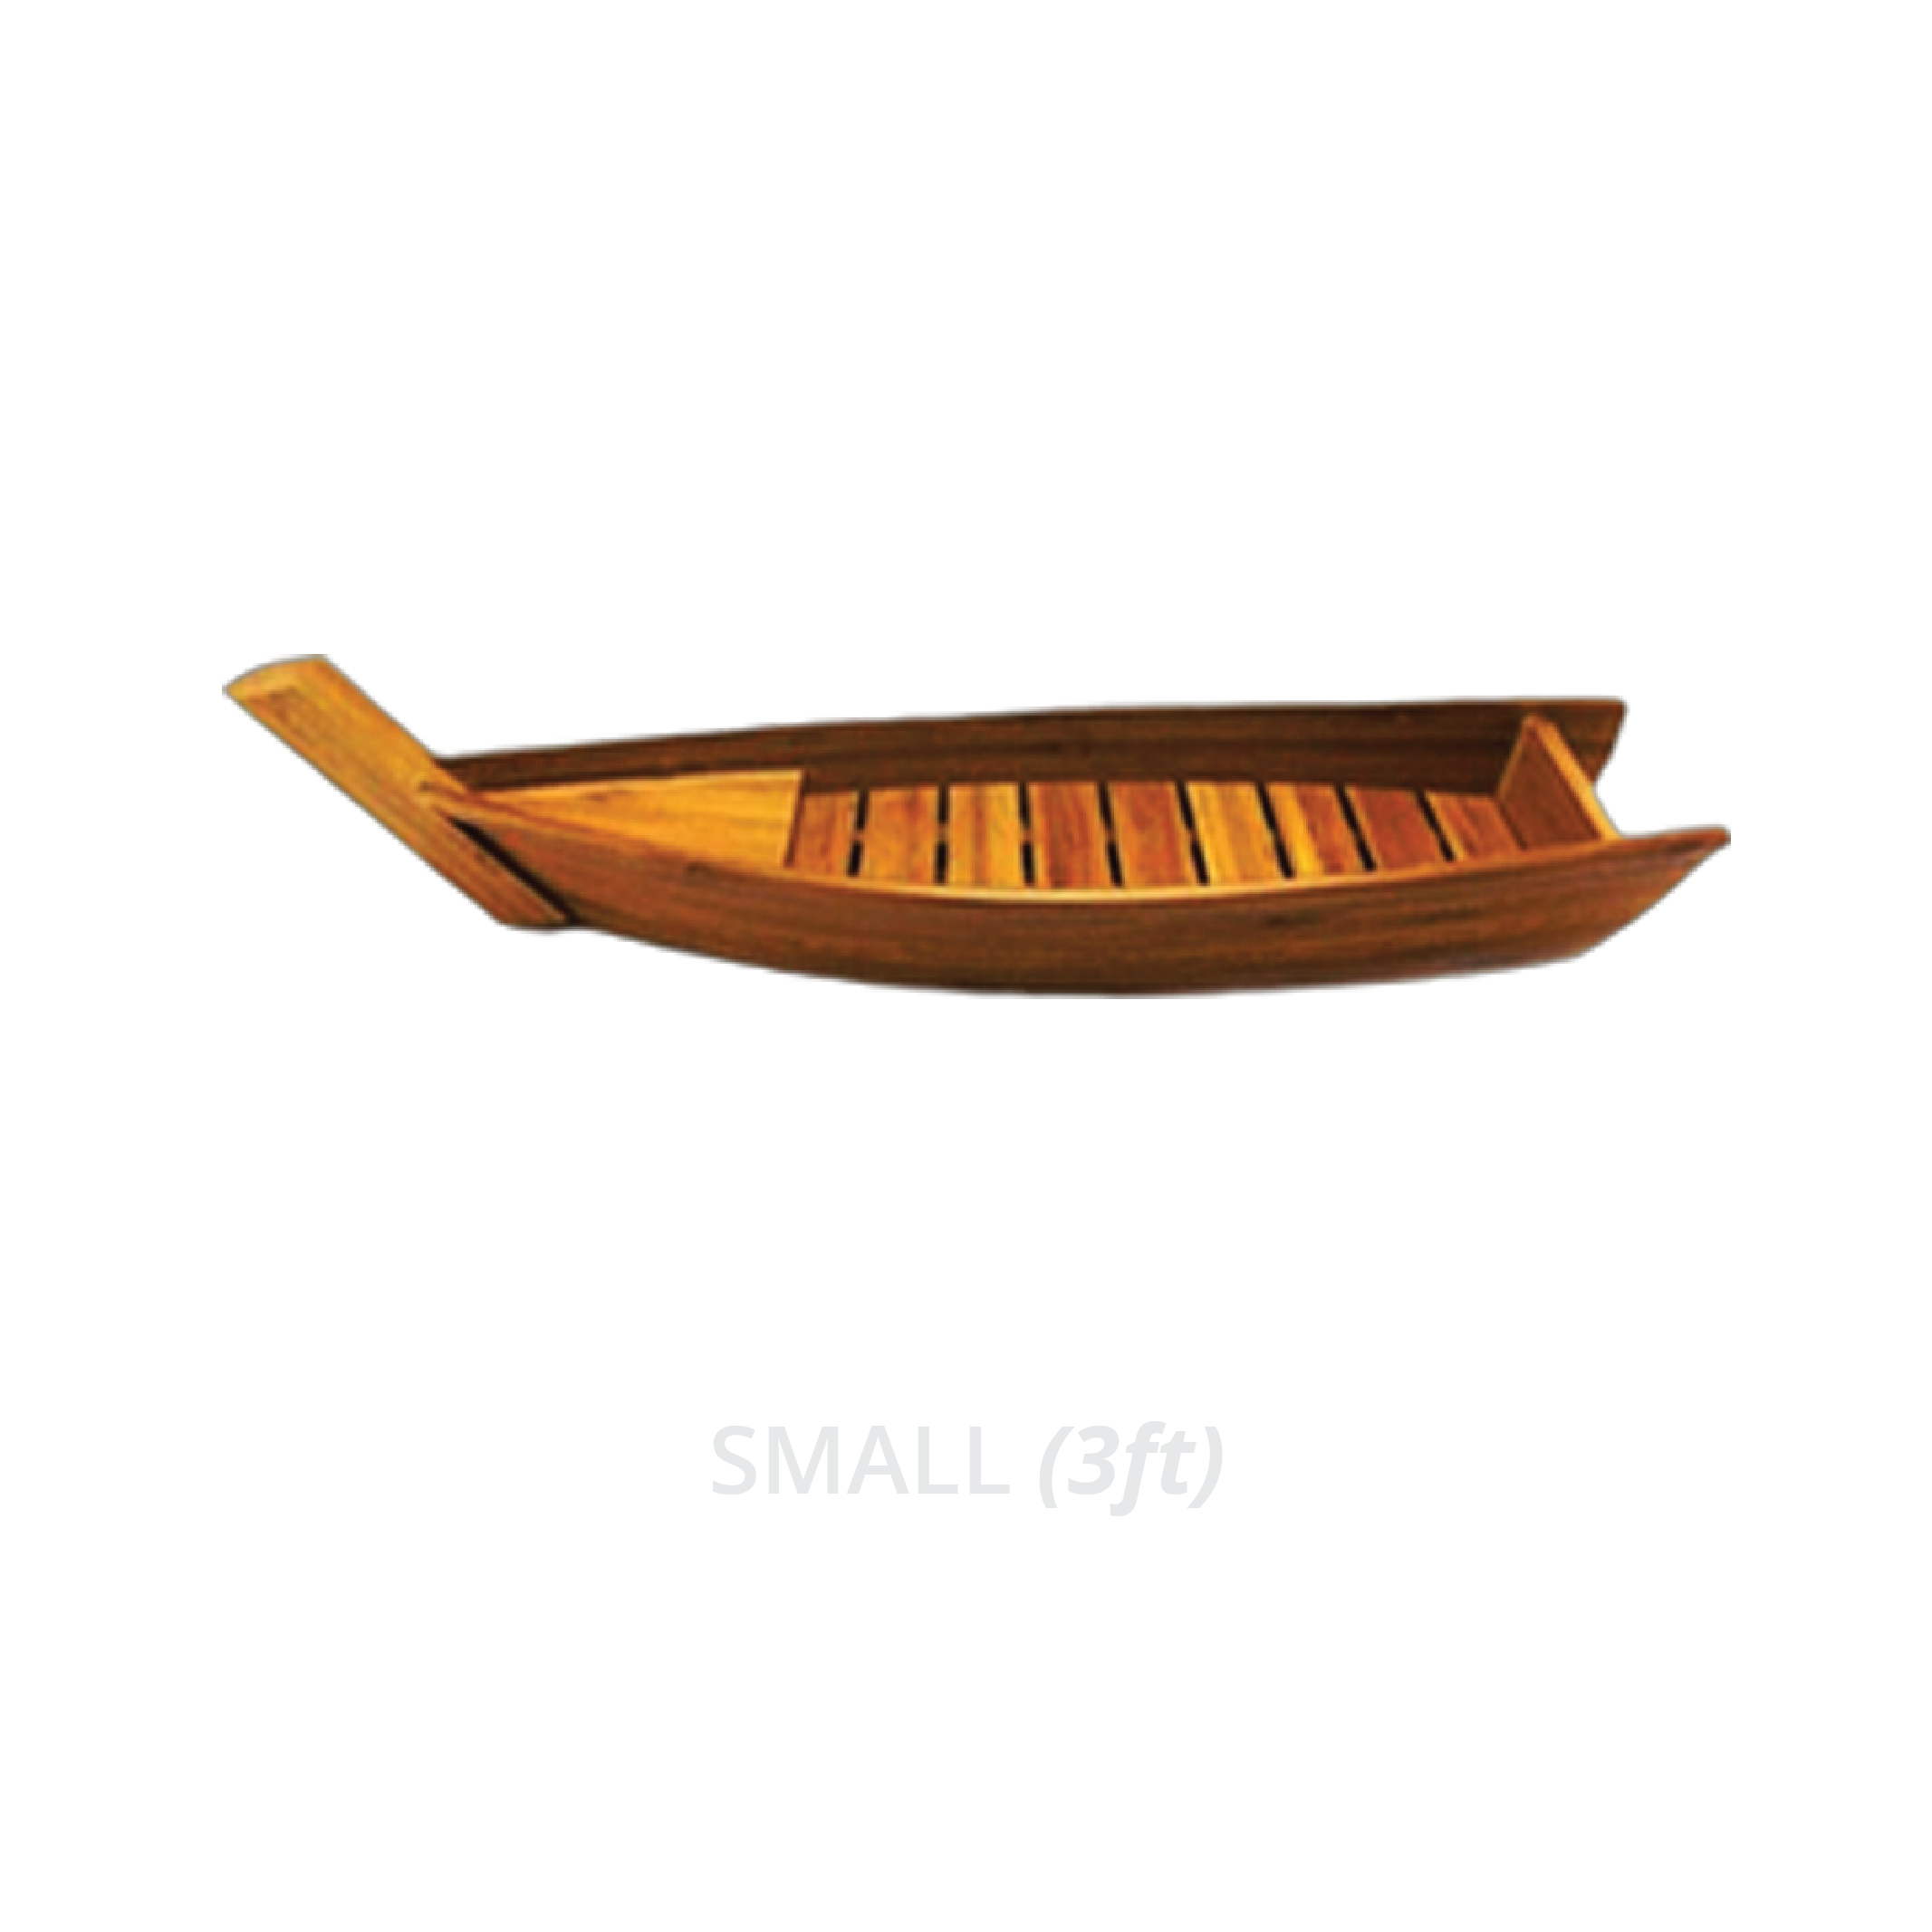 Small boat